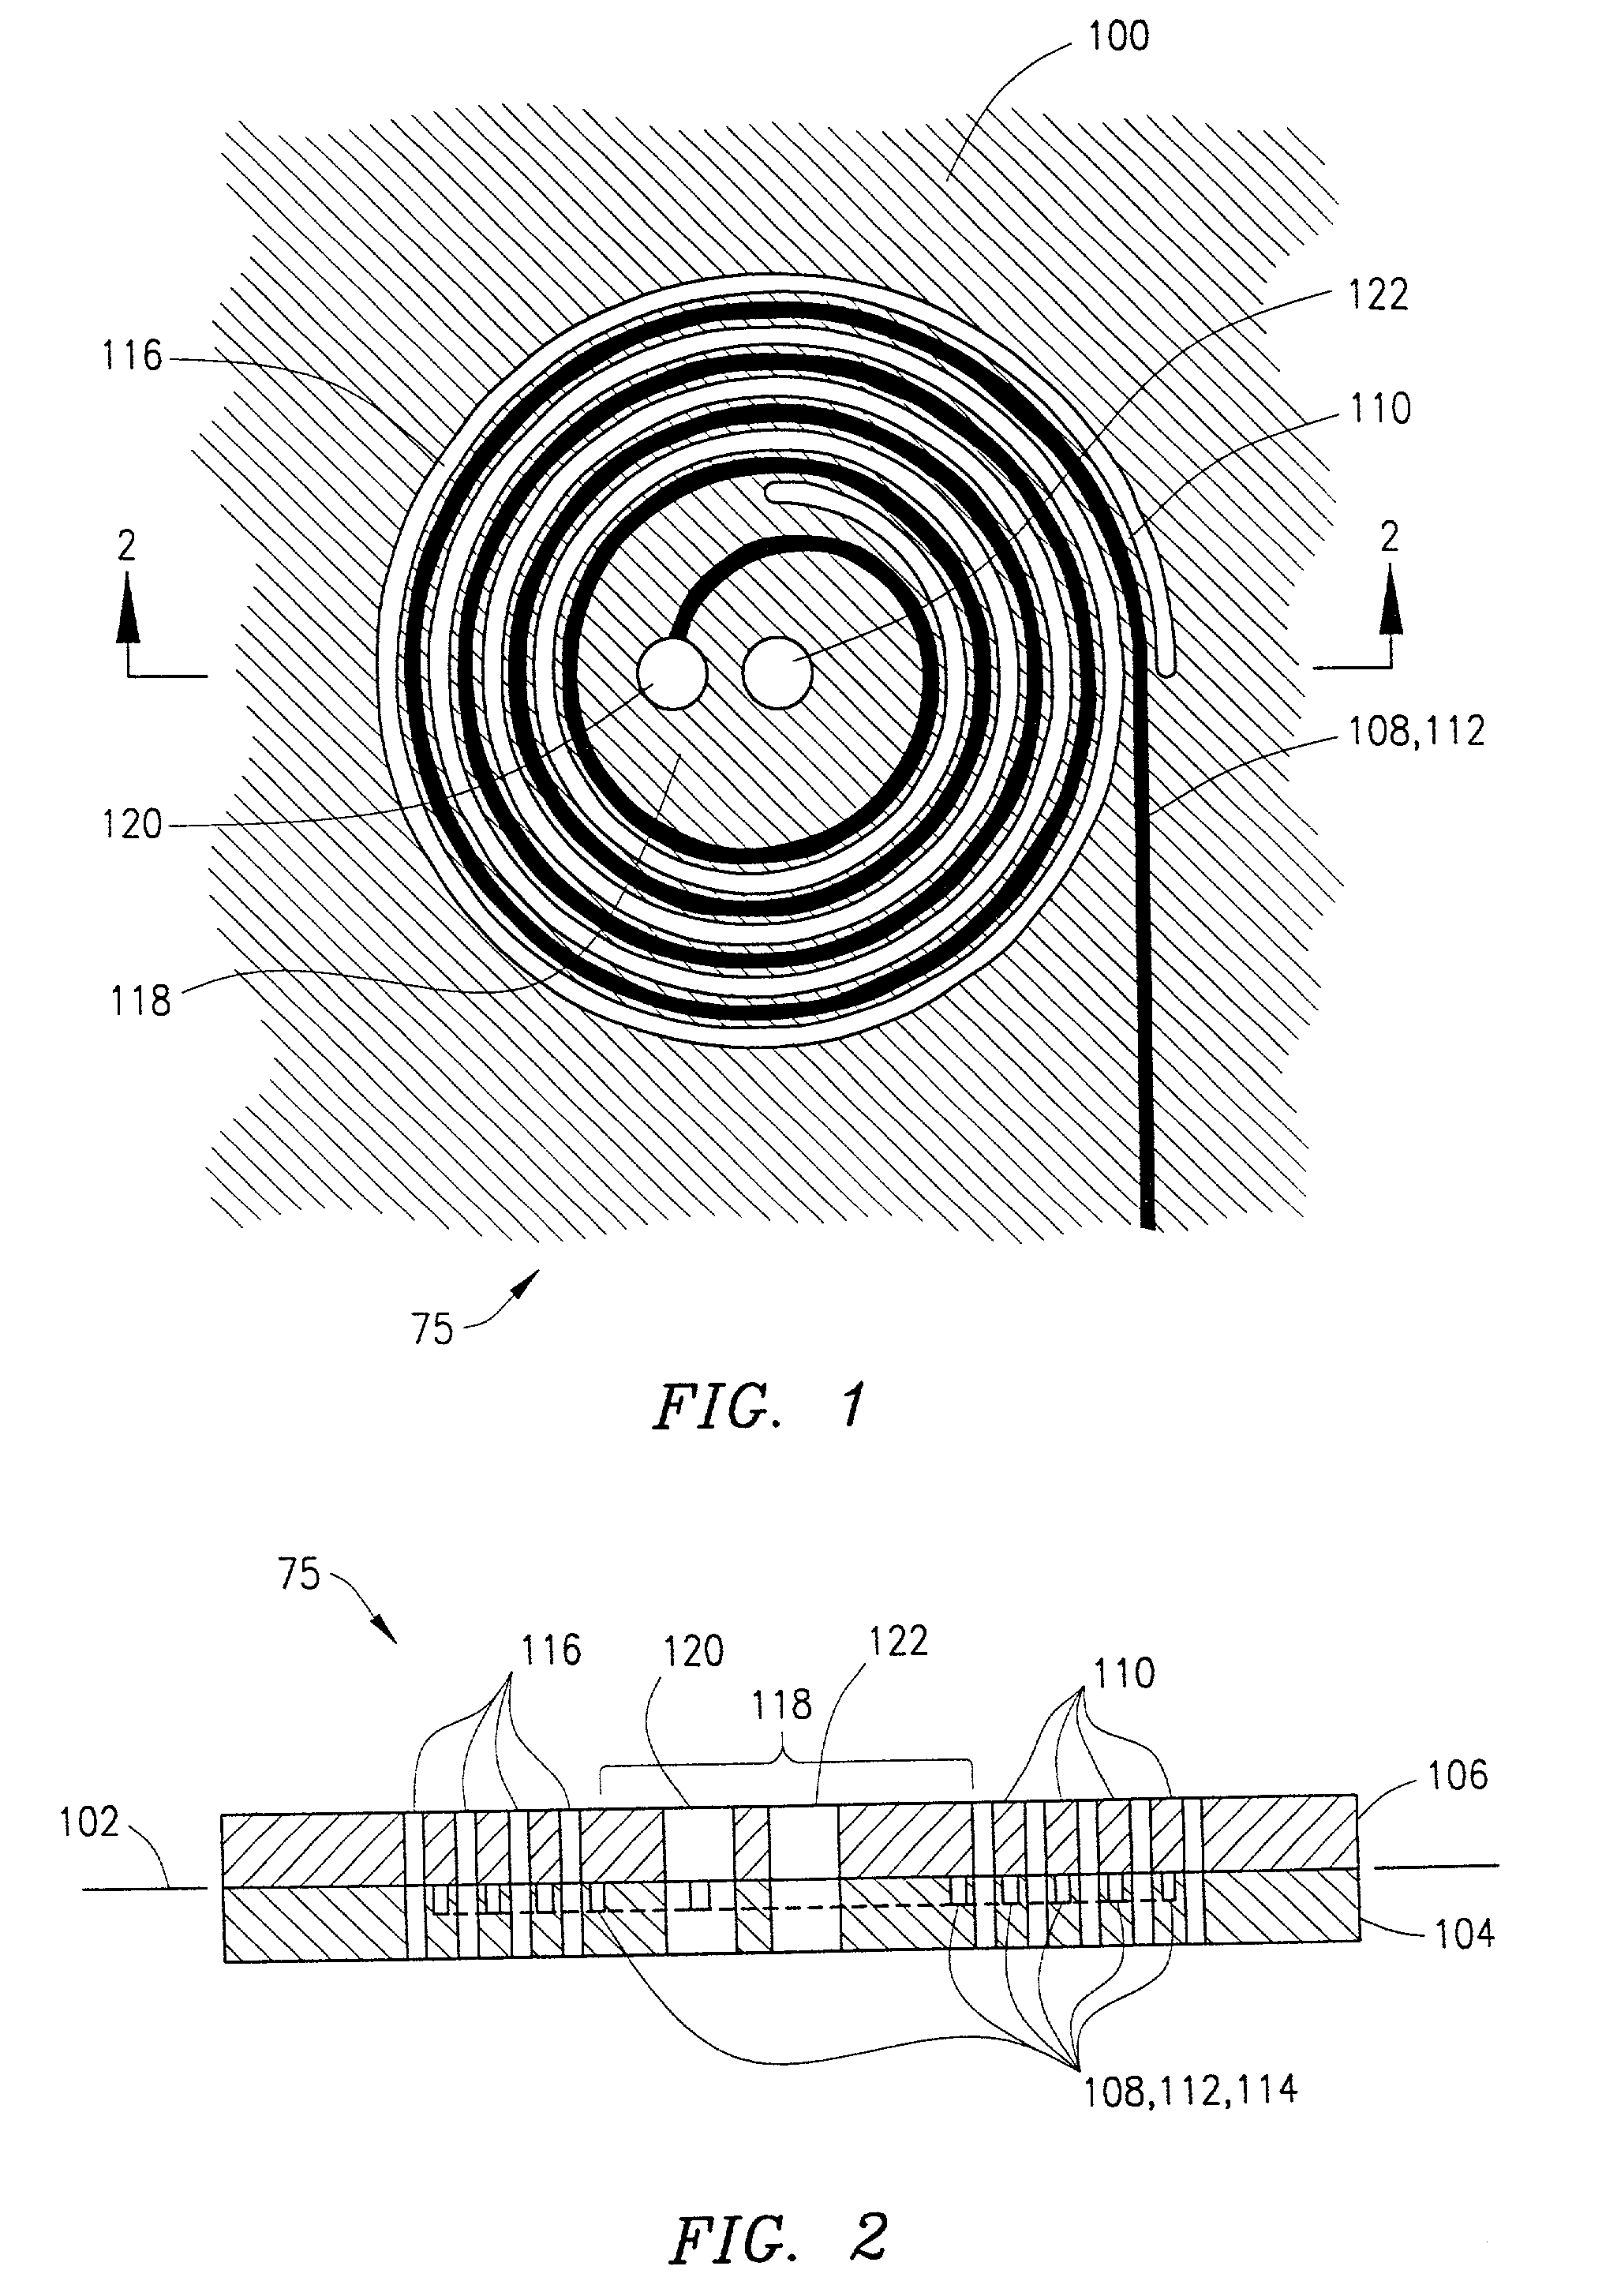 Extensible spiral for flex circuit